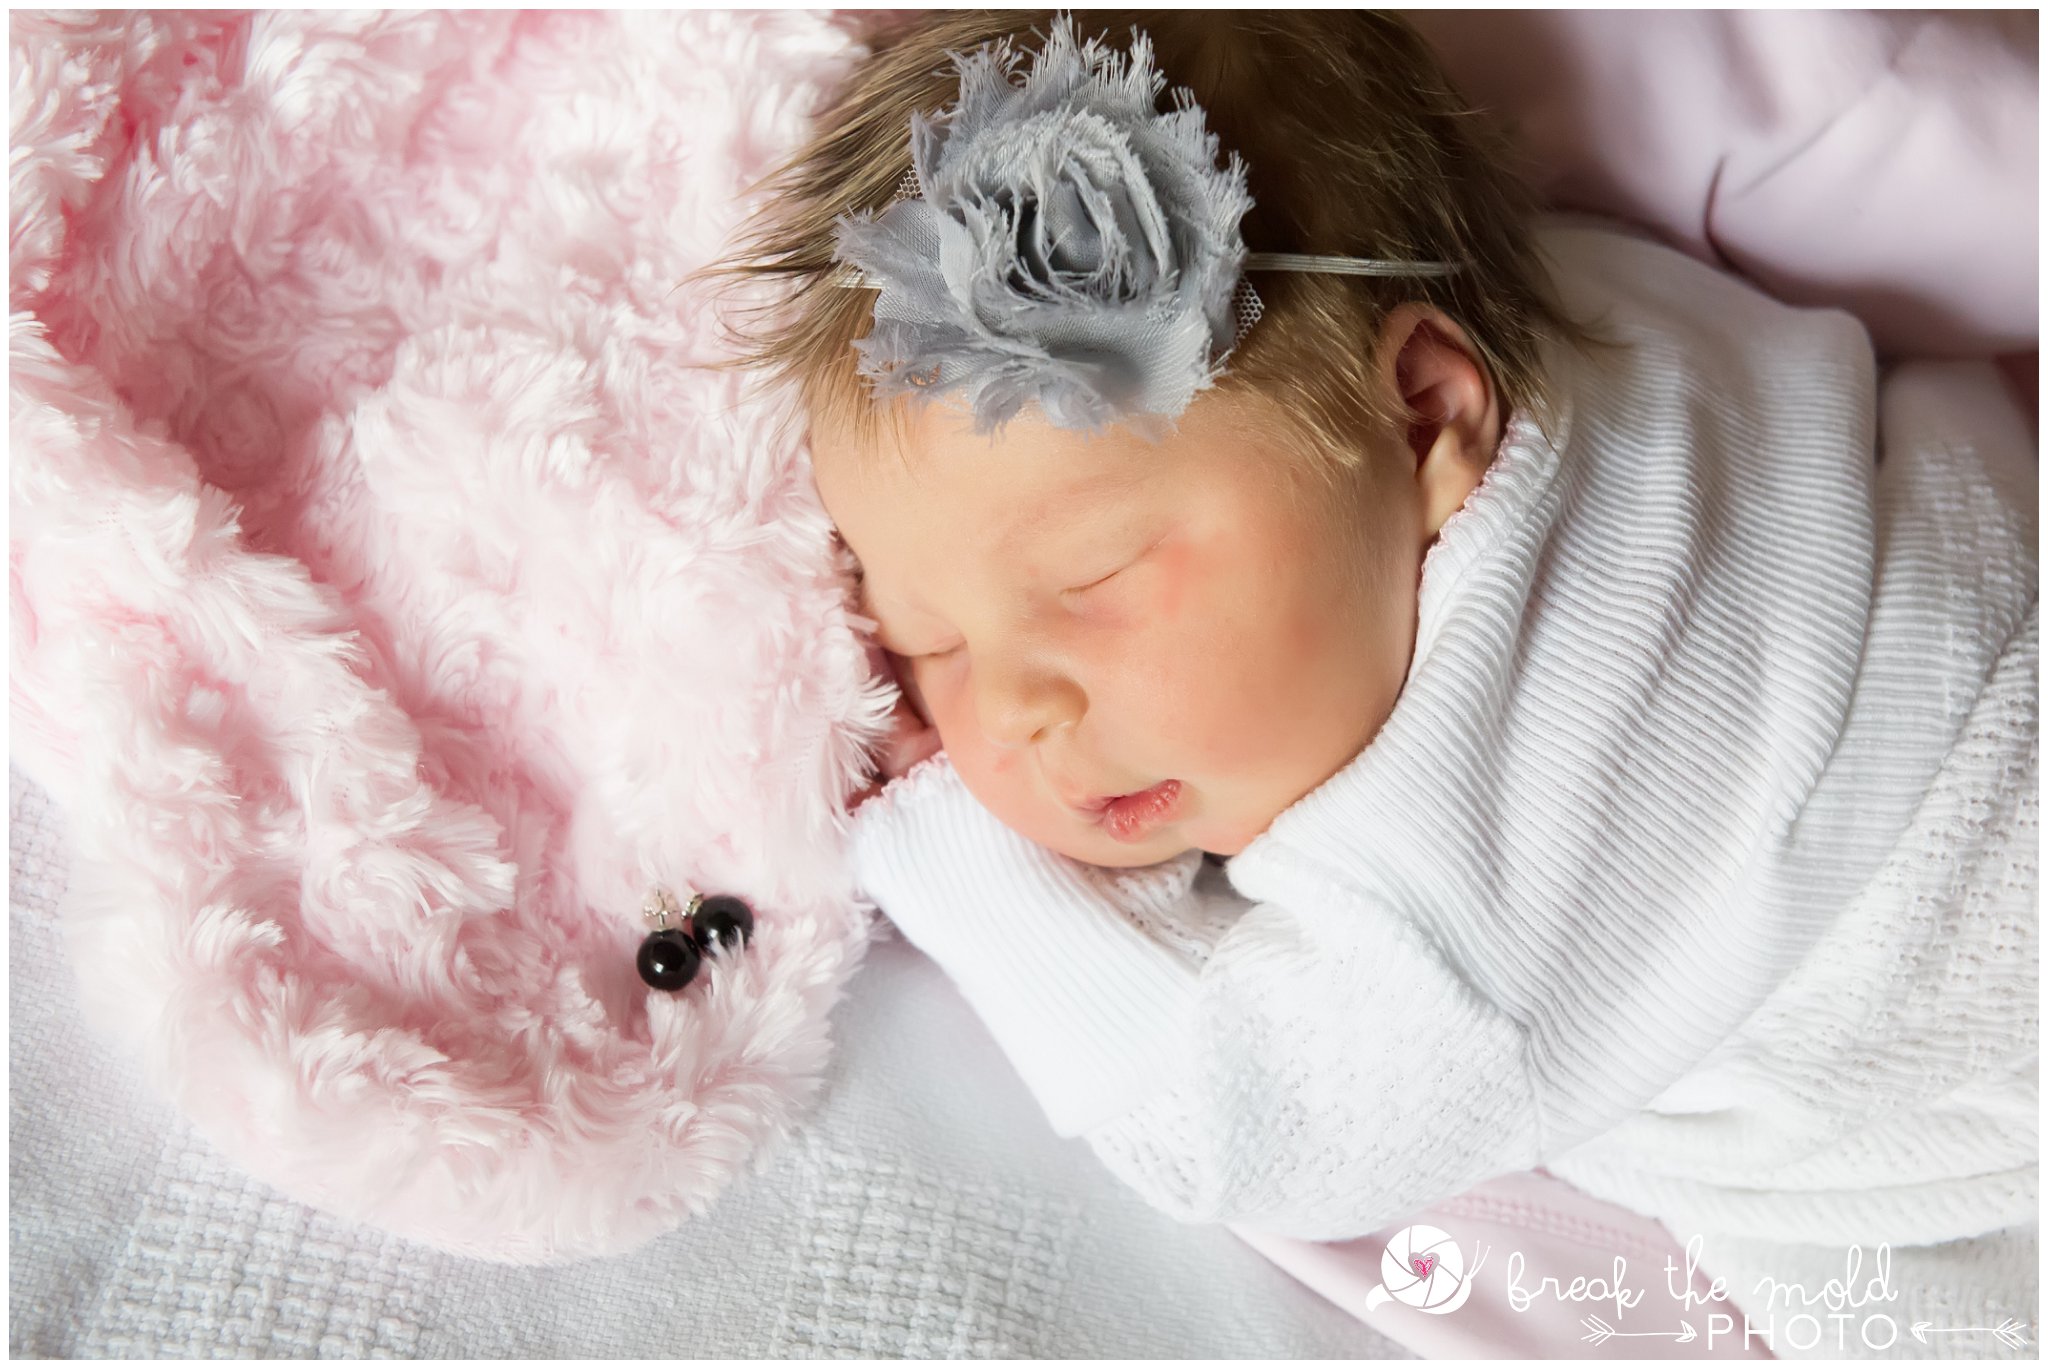 fresh-24-newborn-in-hospital-break-the-mold-photo-baby-girl-sweet-in-room-photos (29).jpg